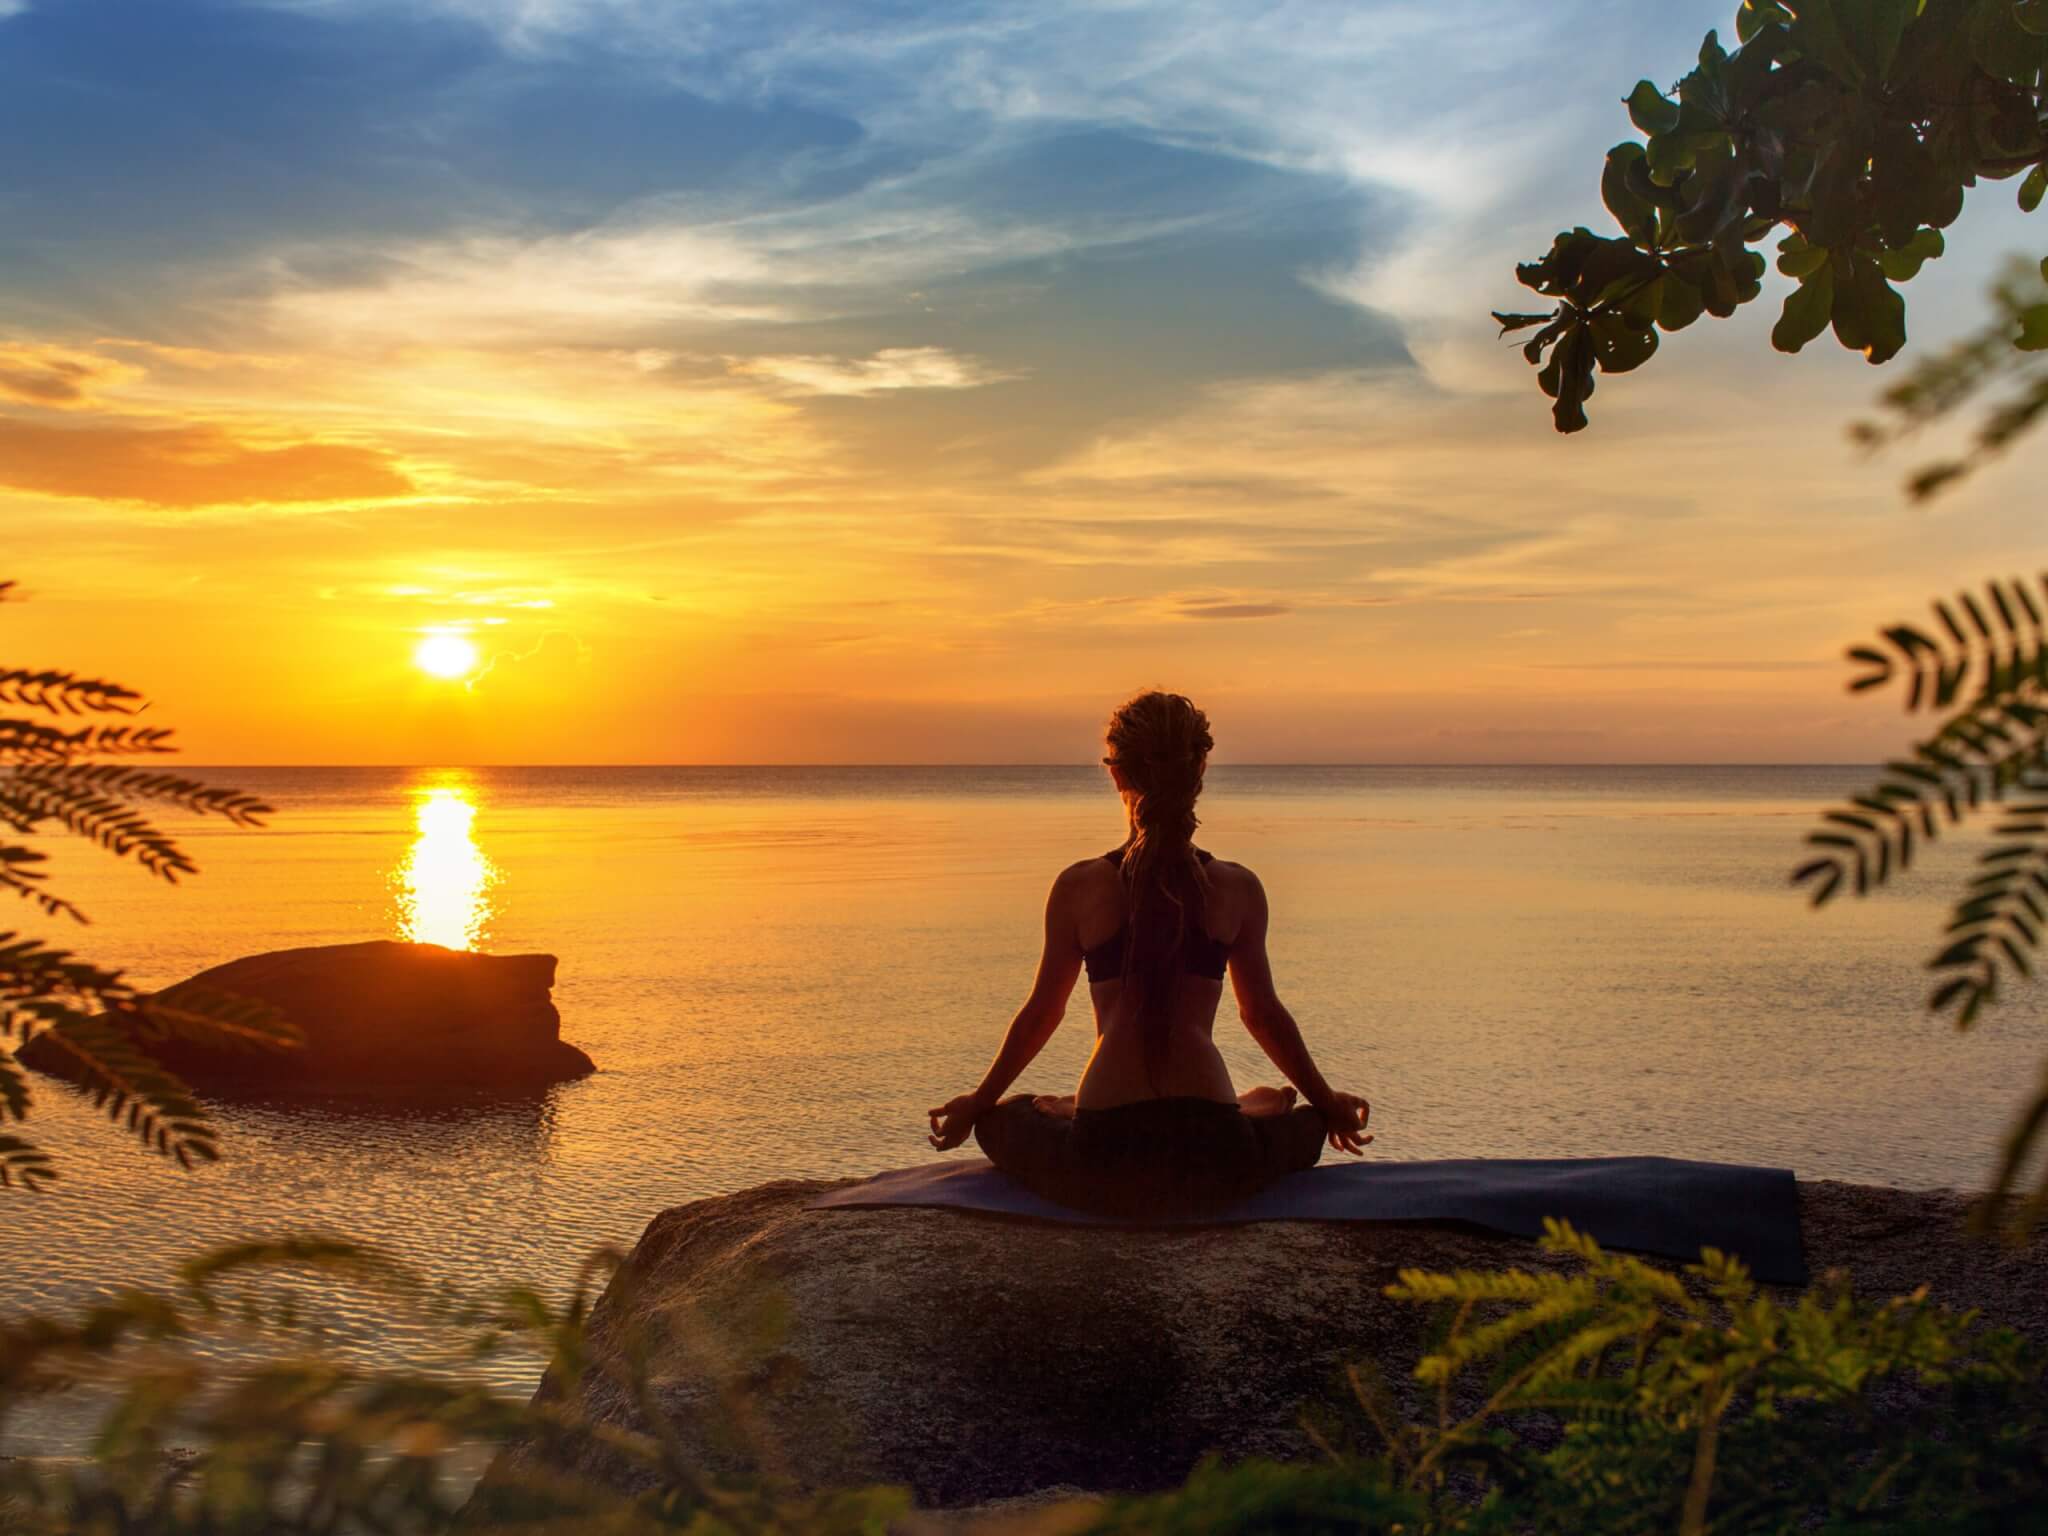 Душевно спокоен. Спокойствие и умиротворение. Медитация на закате. Медитация на берегу моря. Медитация на расслабление.